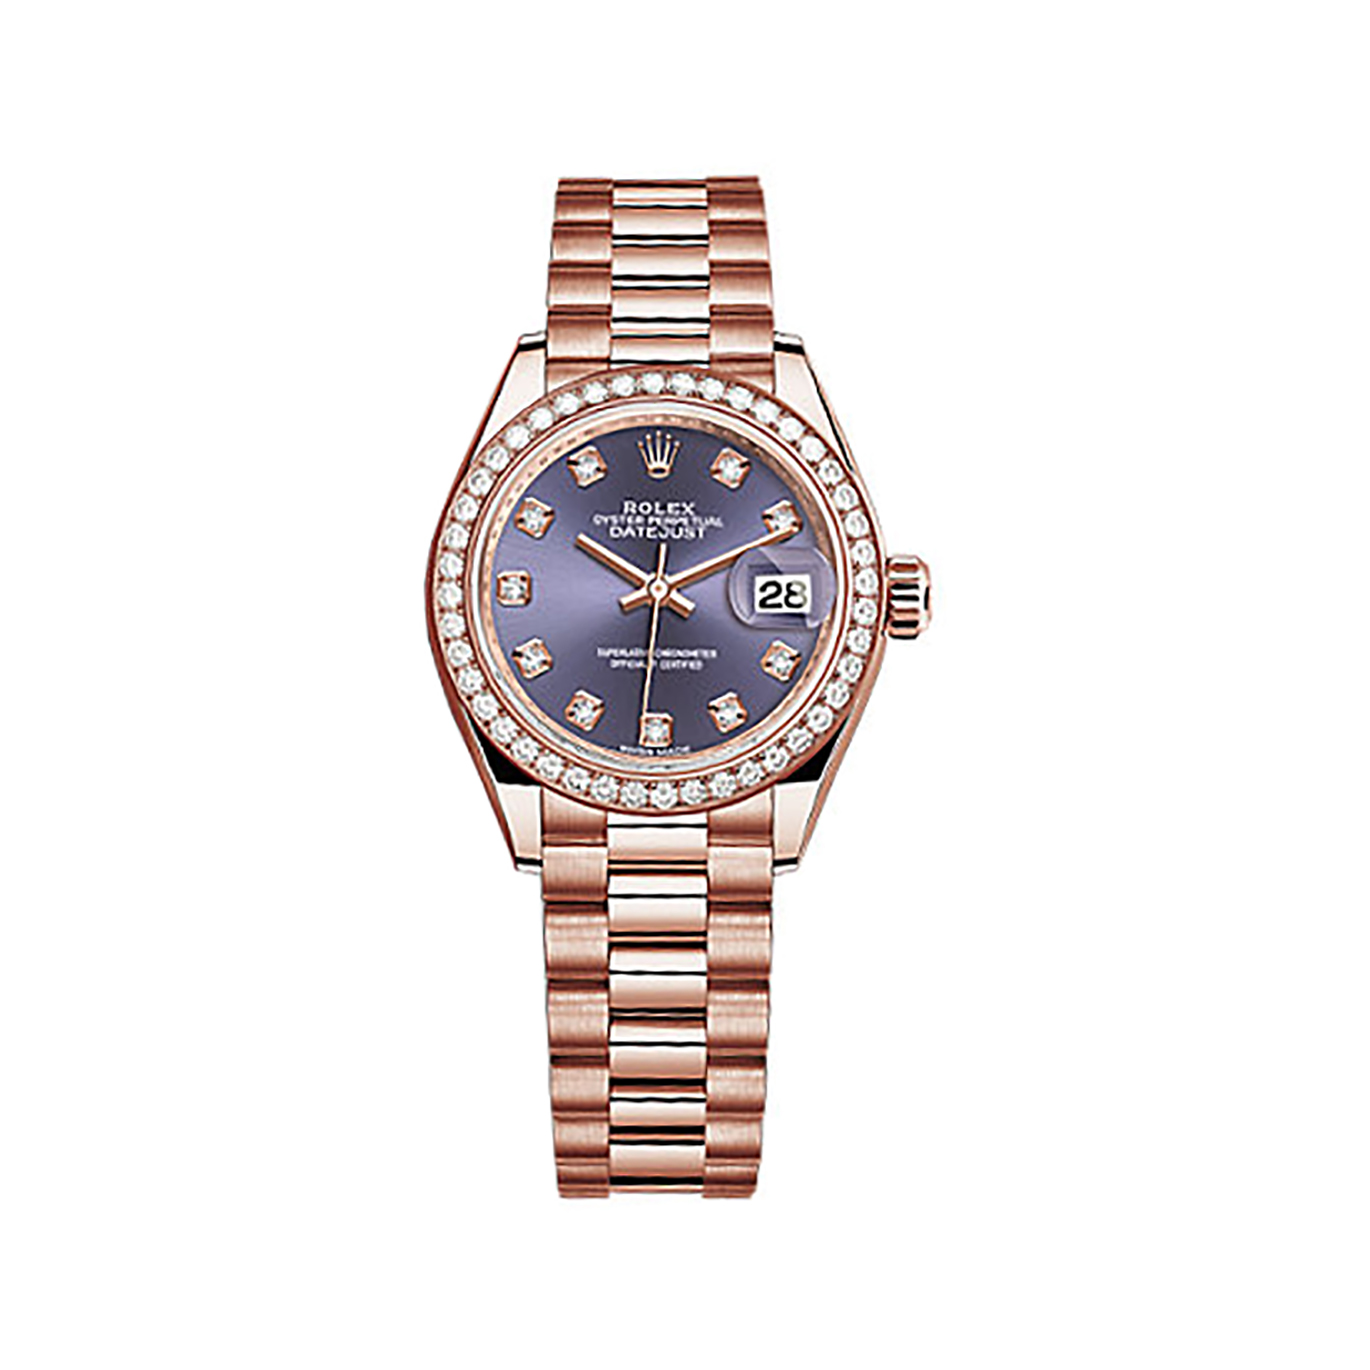 Lady-Datejust 28 279135RBR Rose Gold & Diamonds Watch (Aubergine Set with Diamonds)